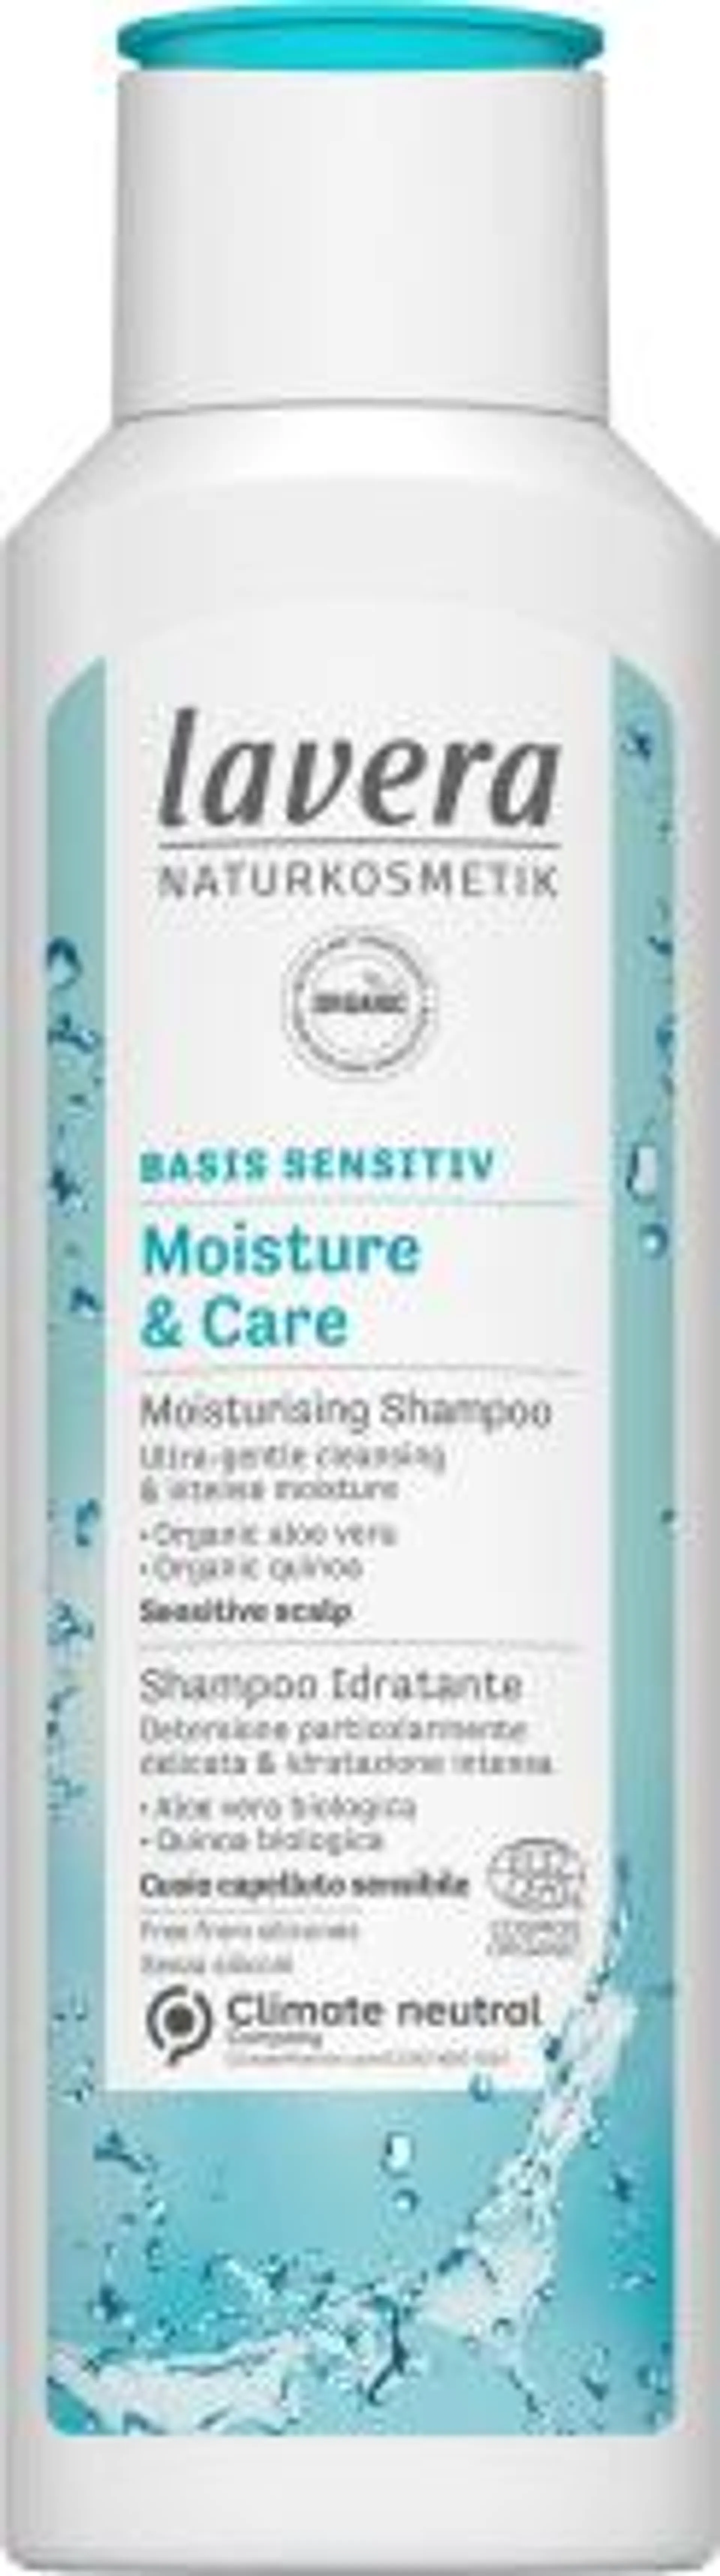 Shampoo idratante Moisture and Care Basis Sensitiv, 250 ml